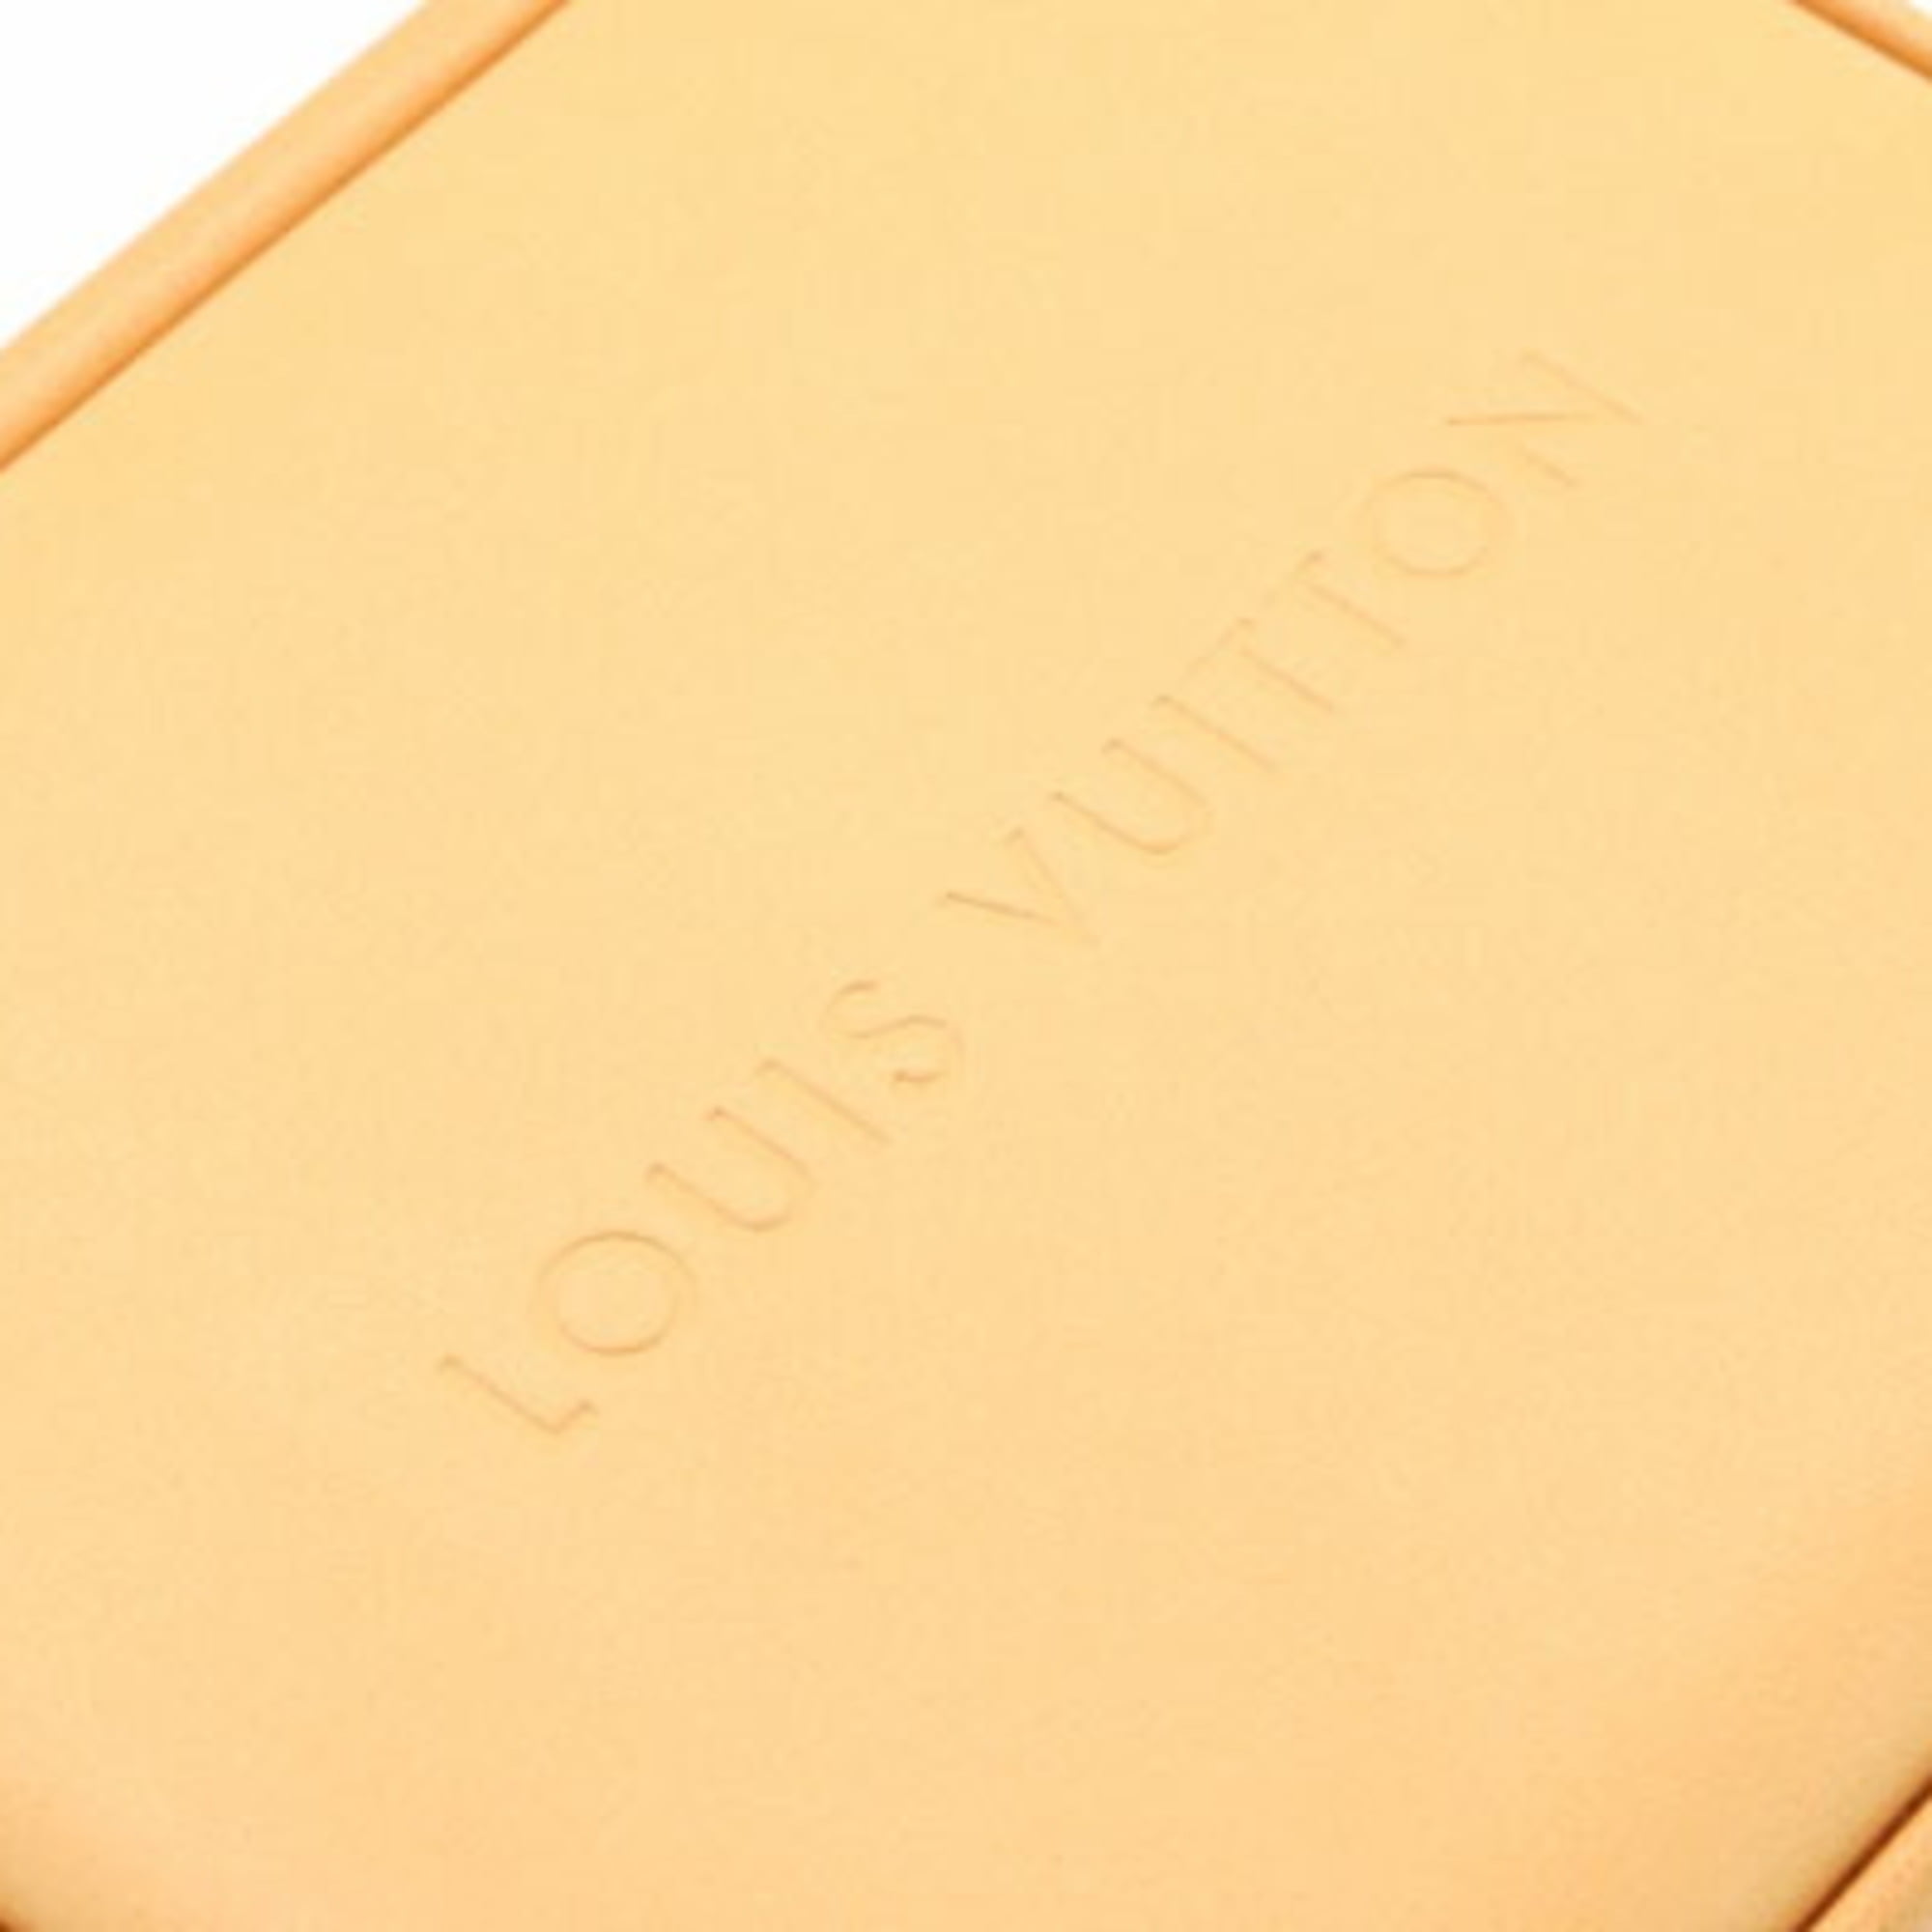 Louis Vuitton watch case light brown leather ladies' men's box